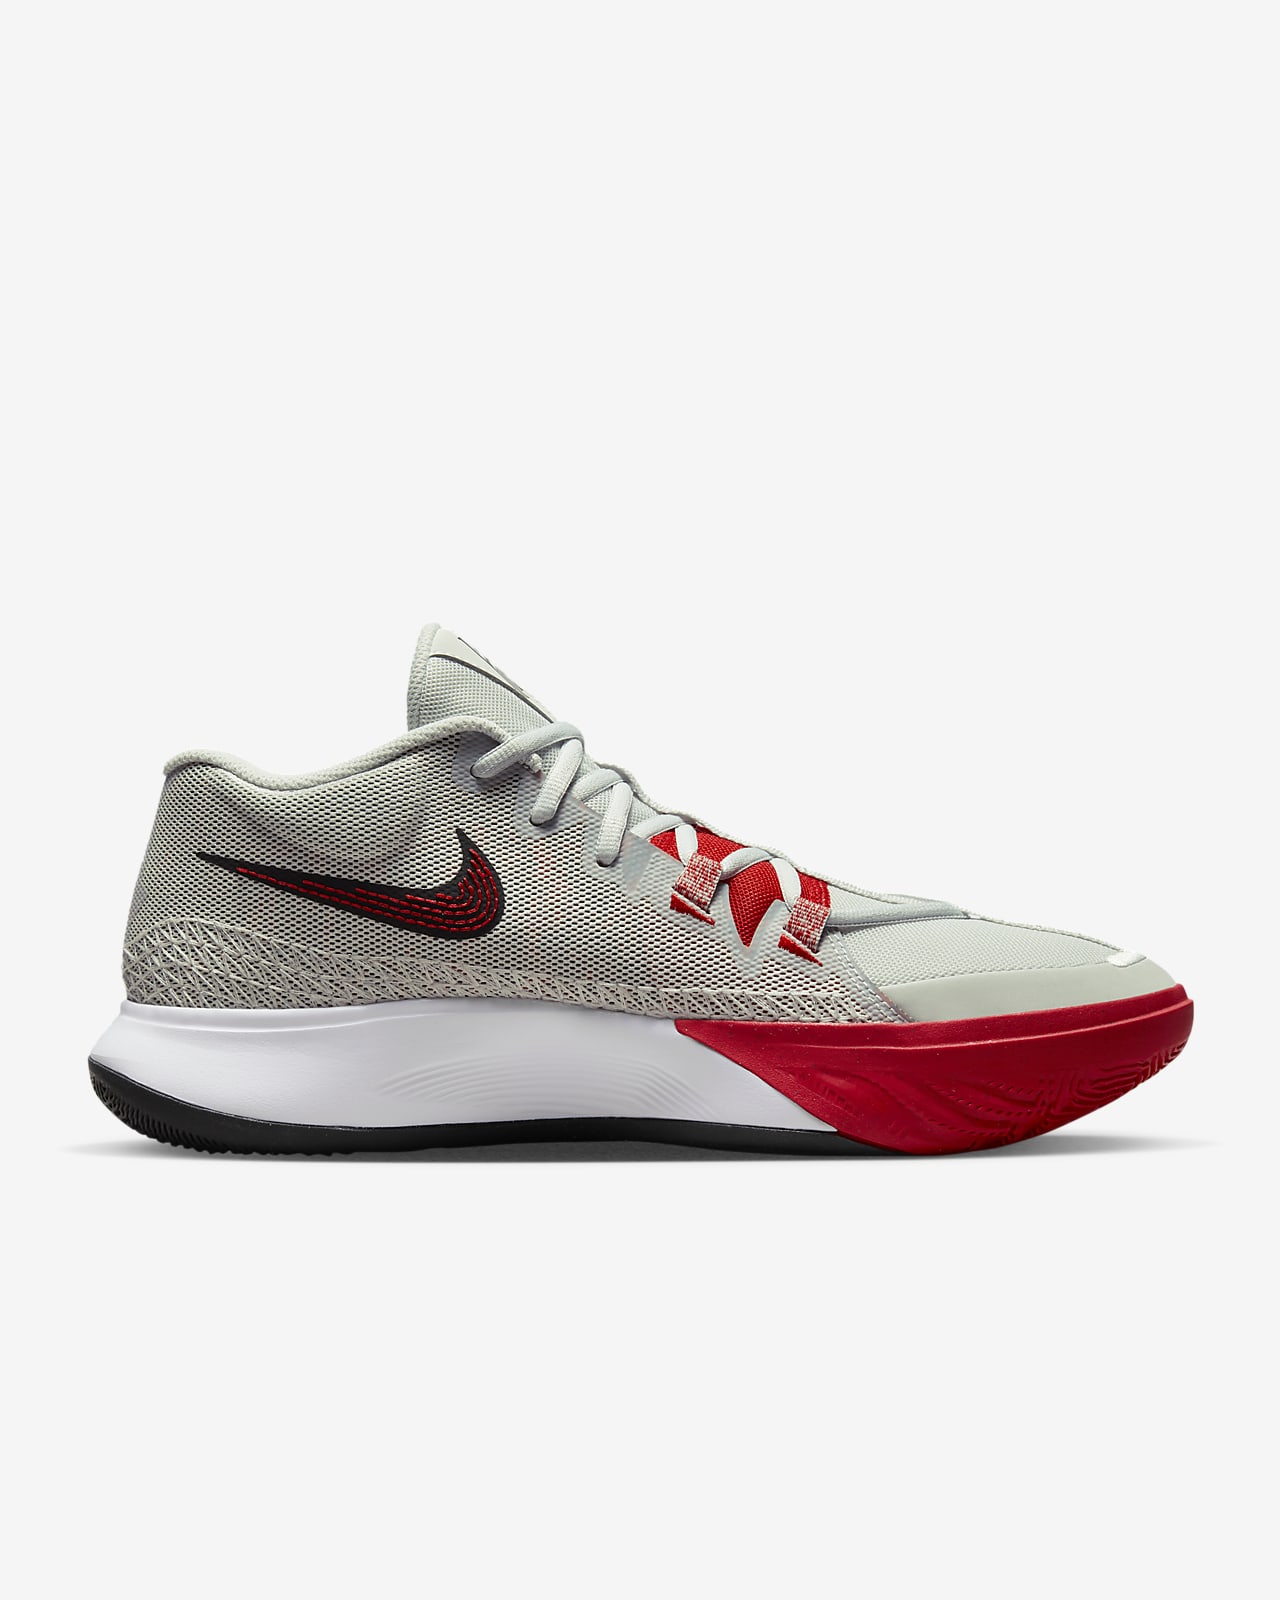 Kyrie Flytrap 6 Basketball Shoes. Nike LU